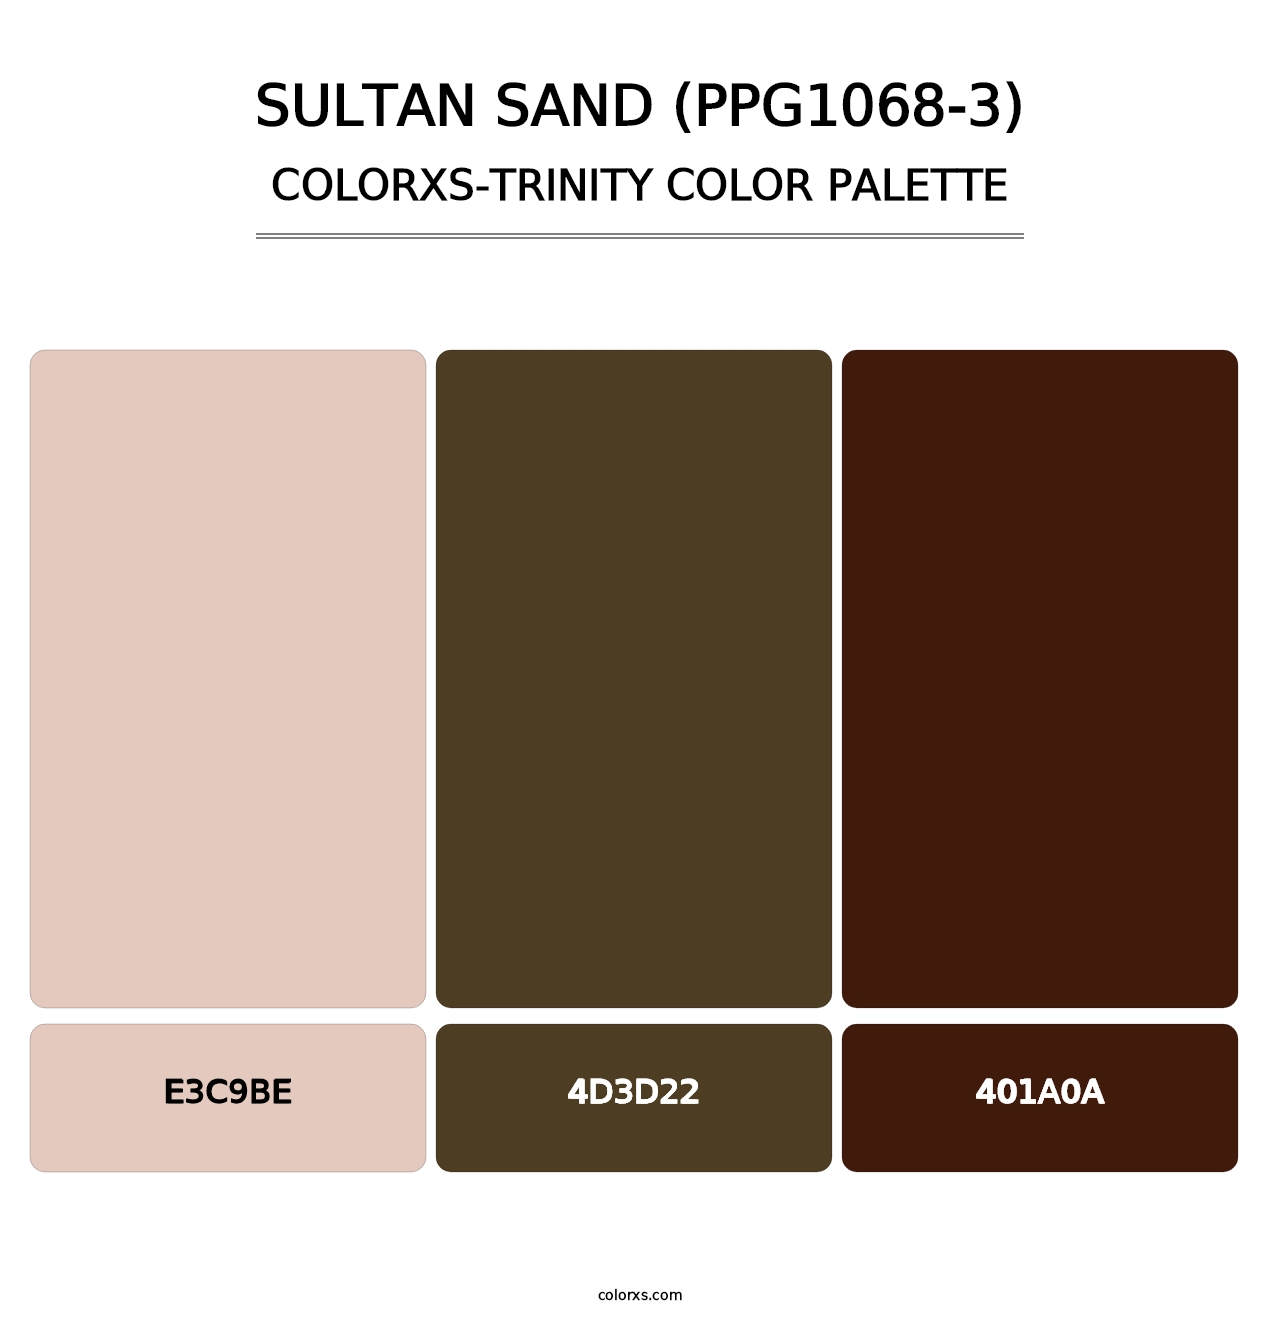 Sultan Sand (PPG1068-3) - Colorxs Trinity Palette